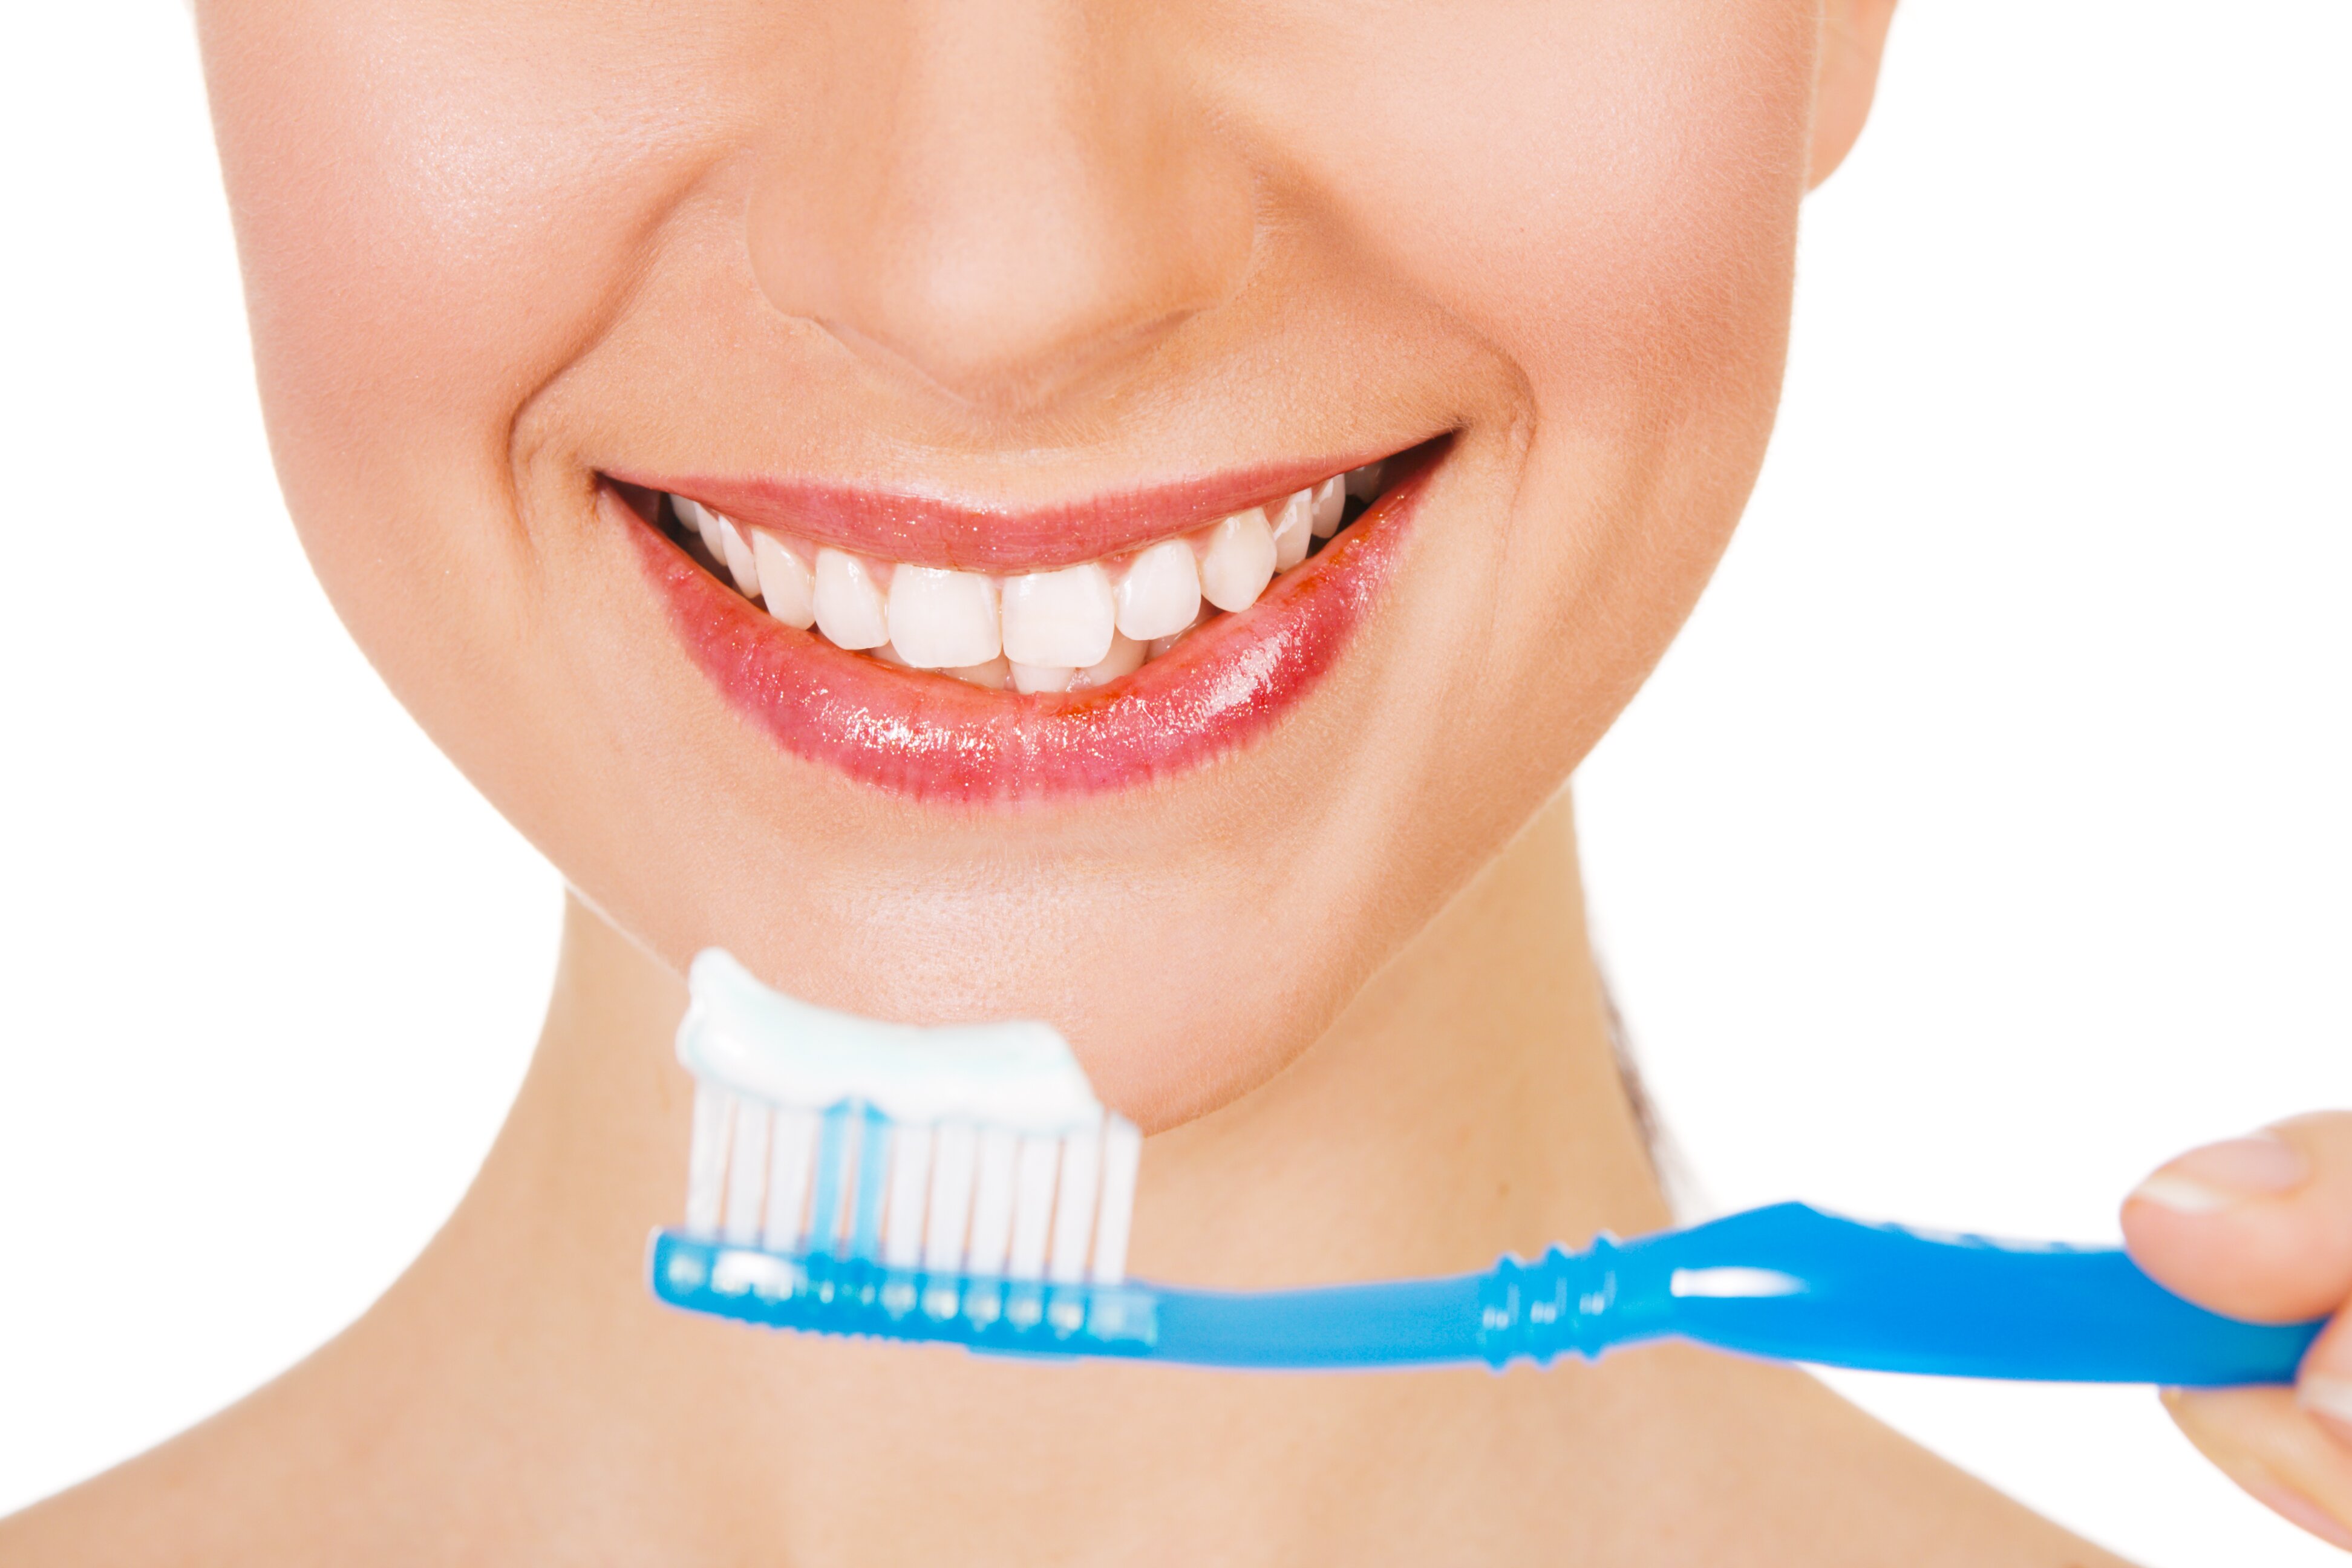 Cosmetic Dentistry - Revealing Notable Improvements in Korean Dentistry